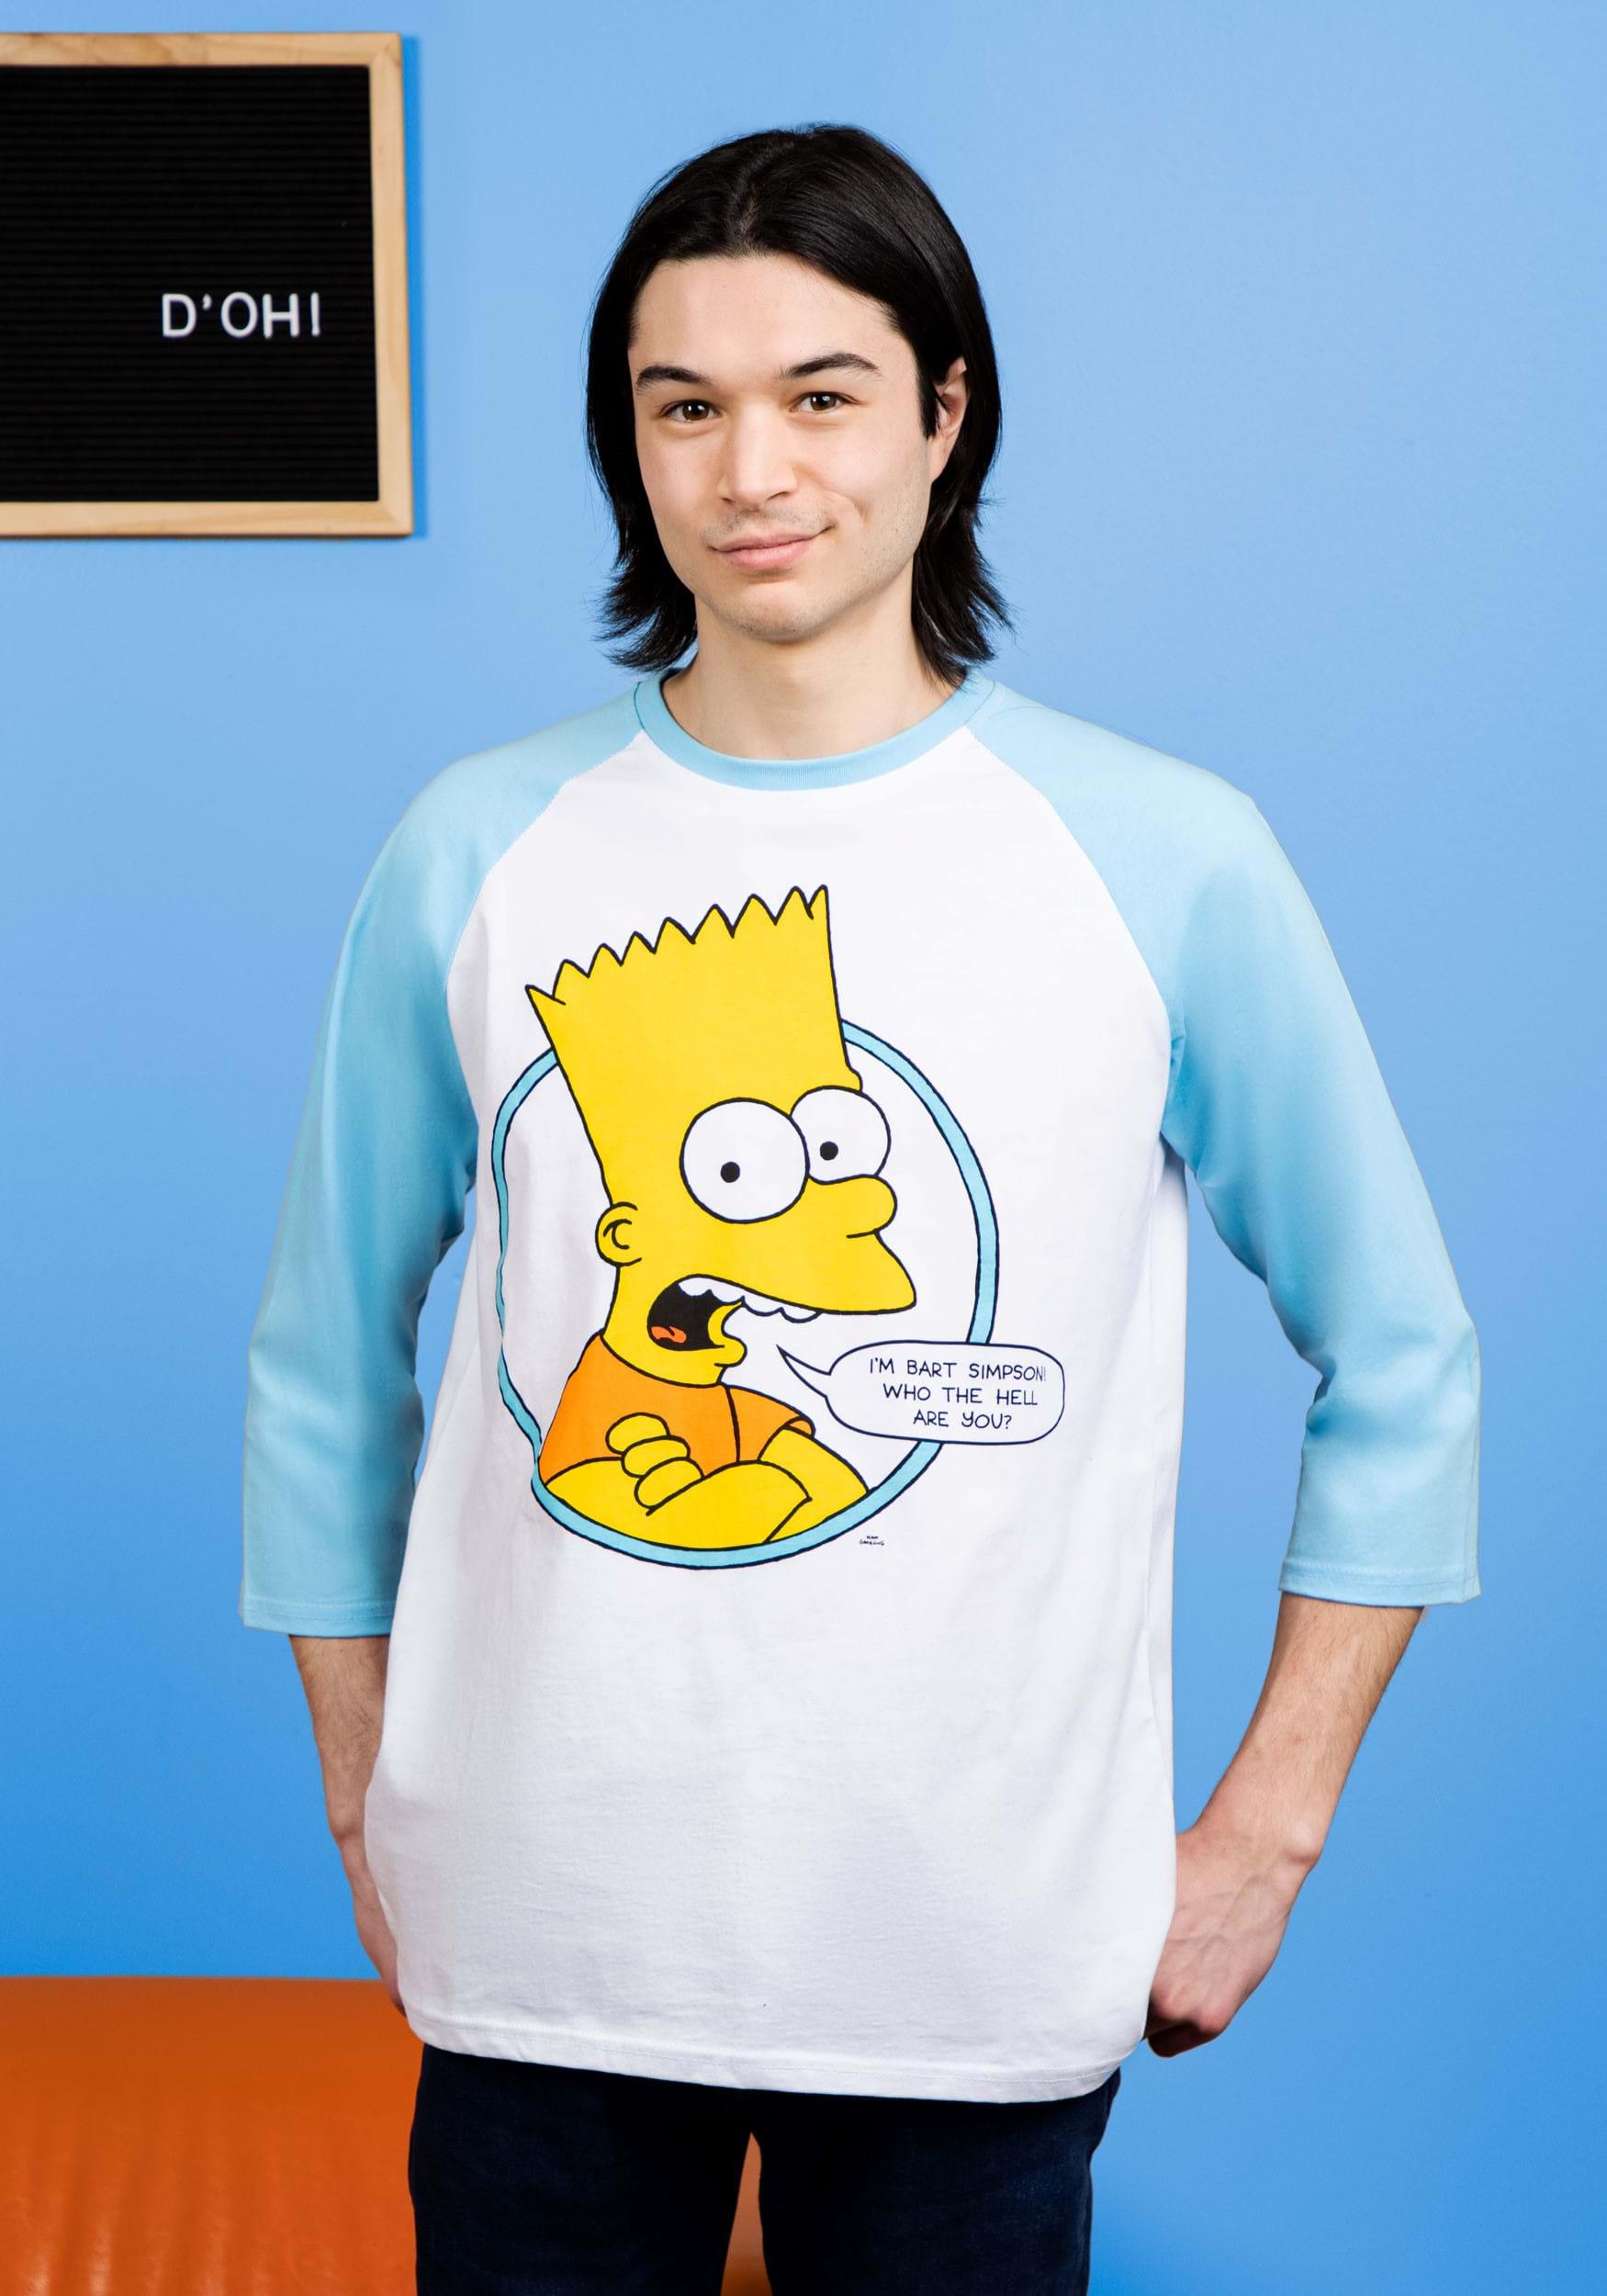 I'm Bart Simpson Raglan Cakeworthy T-Shirt , Simpsons Apparel